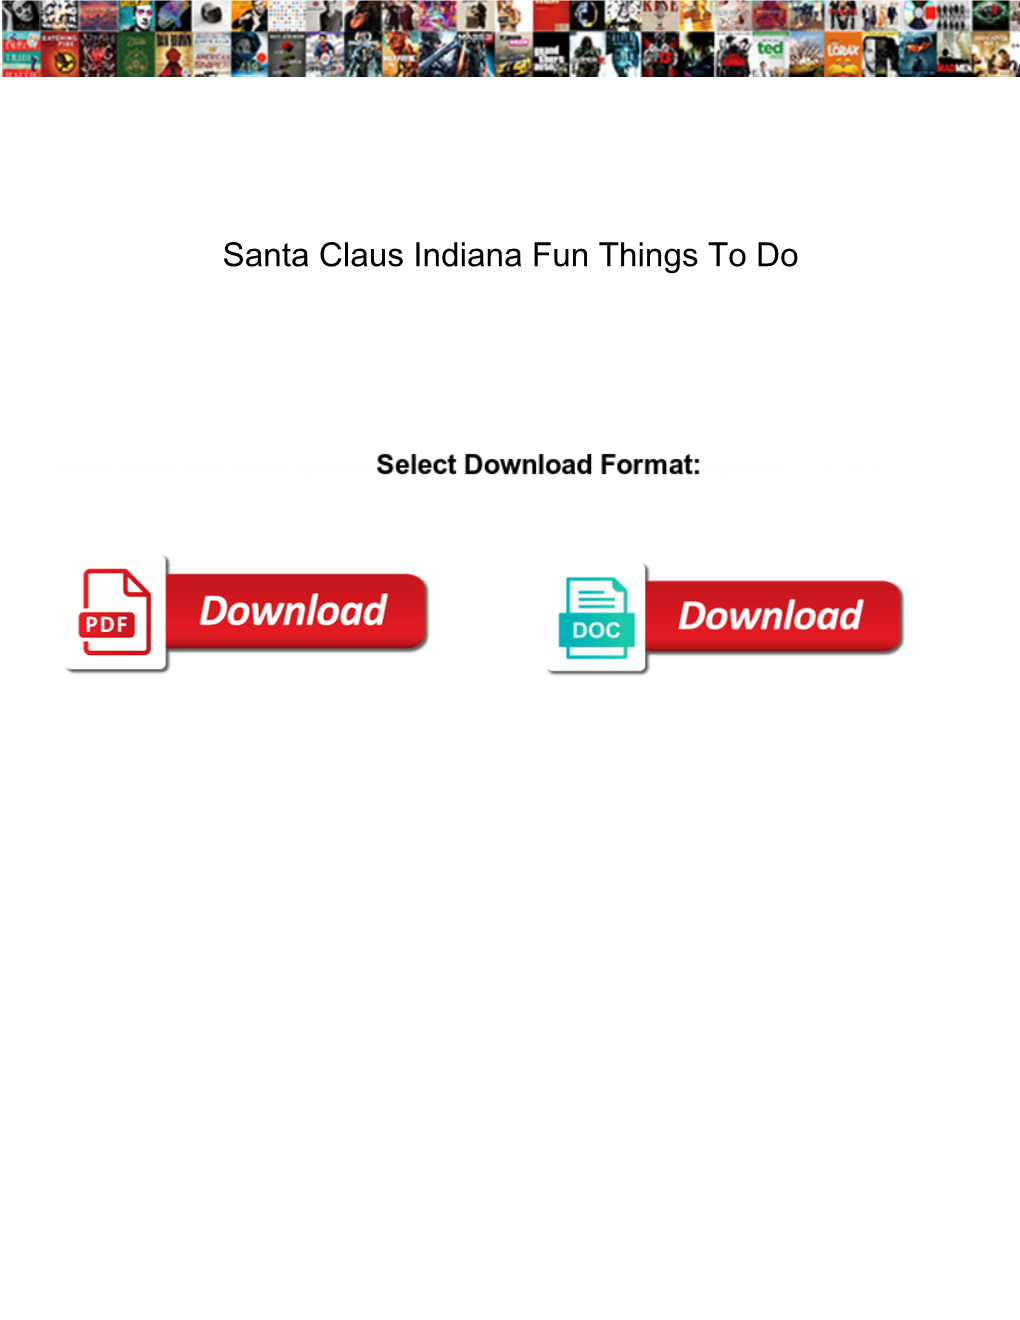 Santa Claus Indiana Fun Things to Do